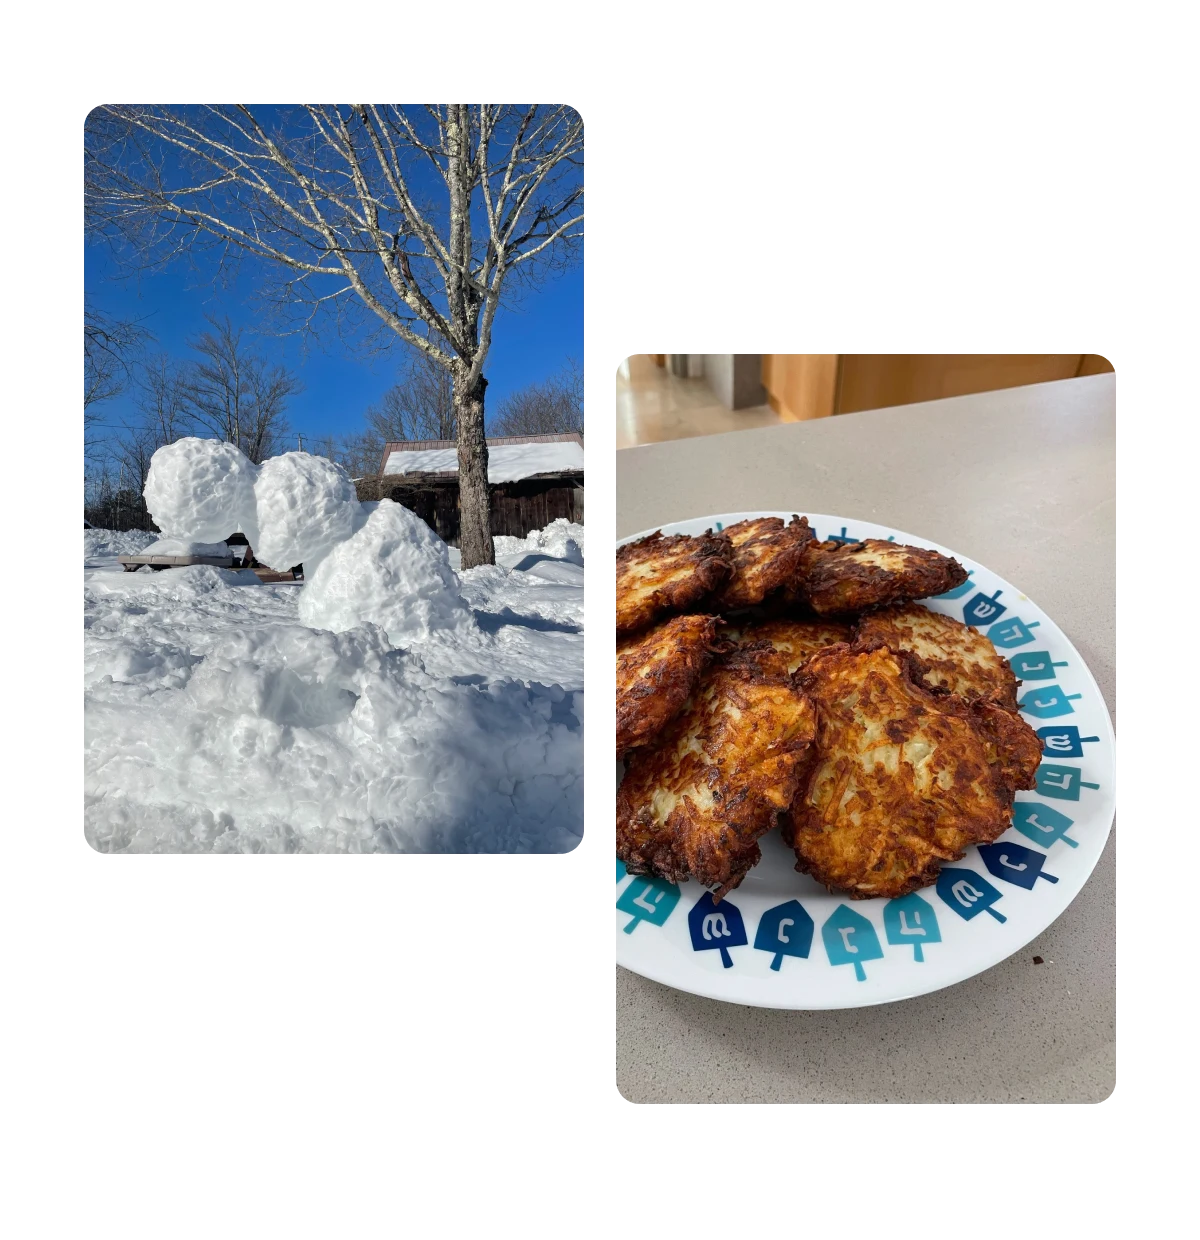 Two pins, melting snowman, plate of potato latkes